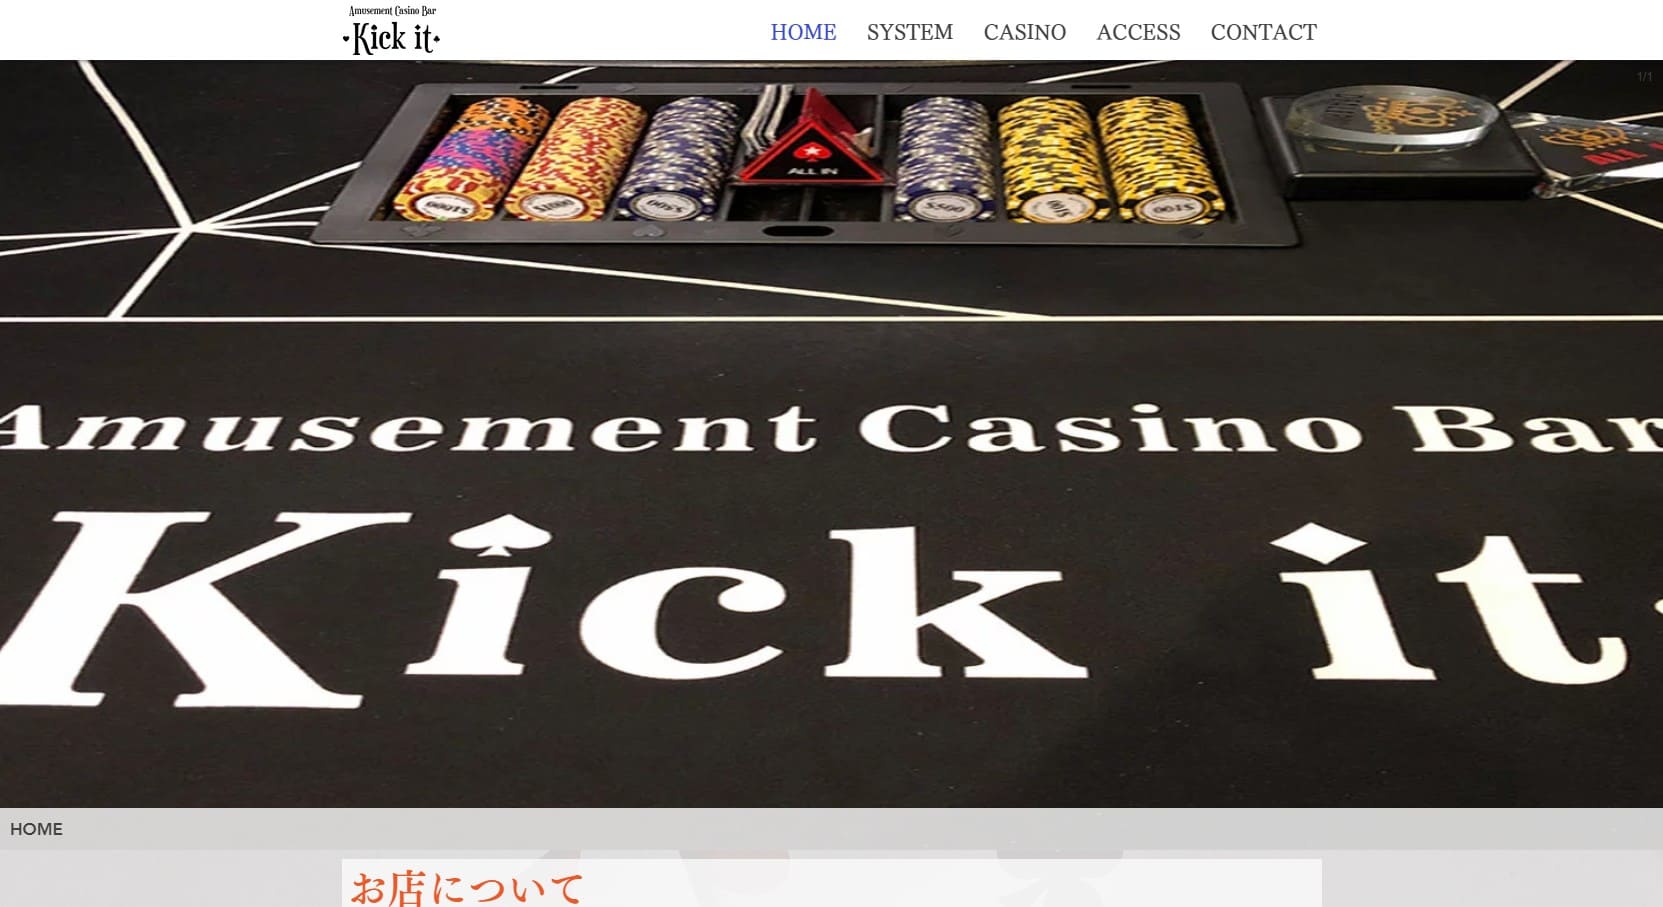 Amusement Casino Bar kick itのウェブサイト画像。